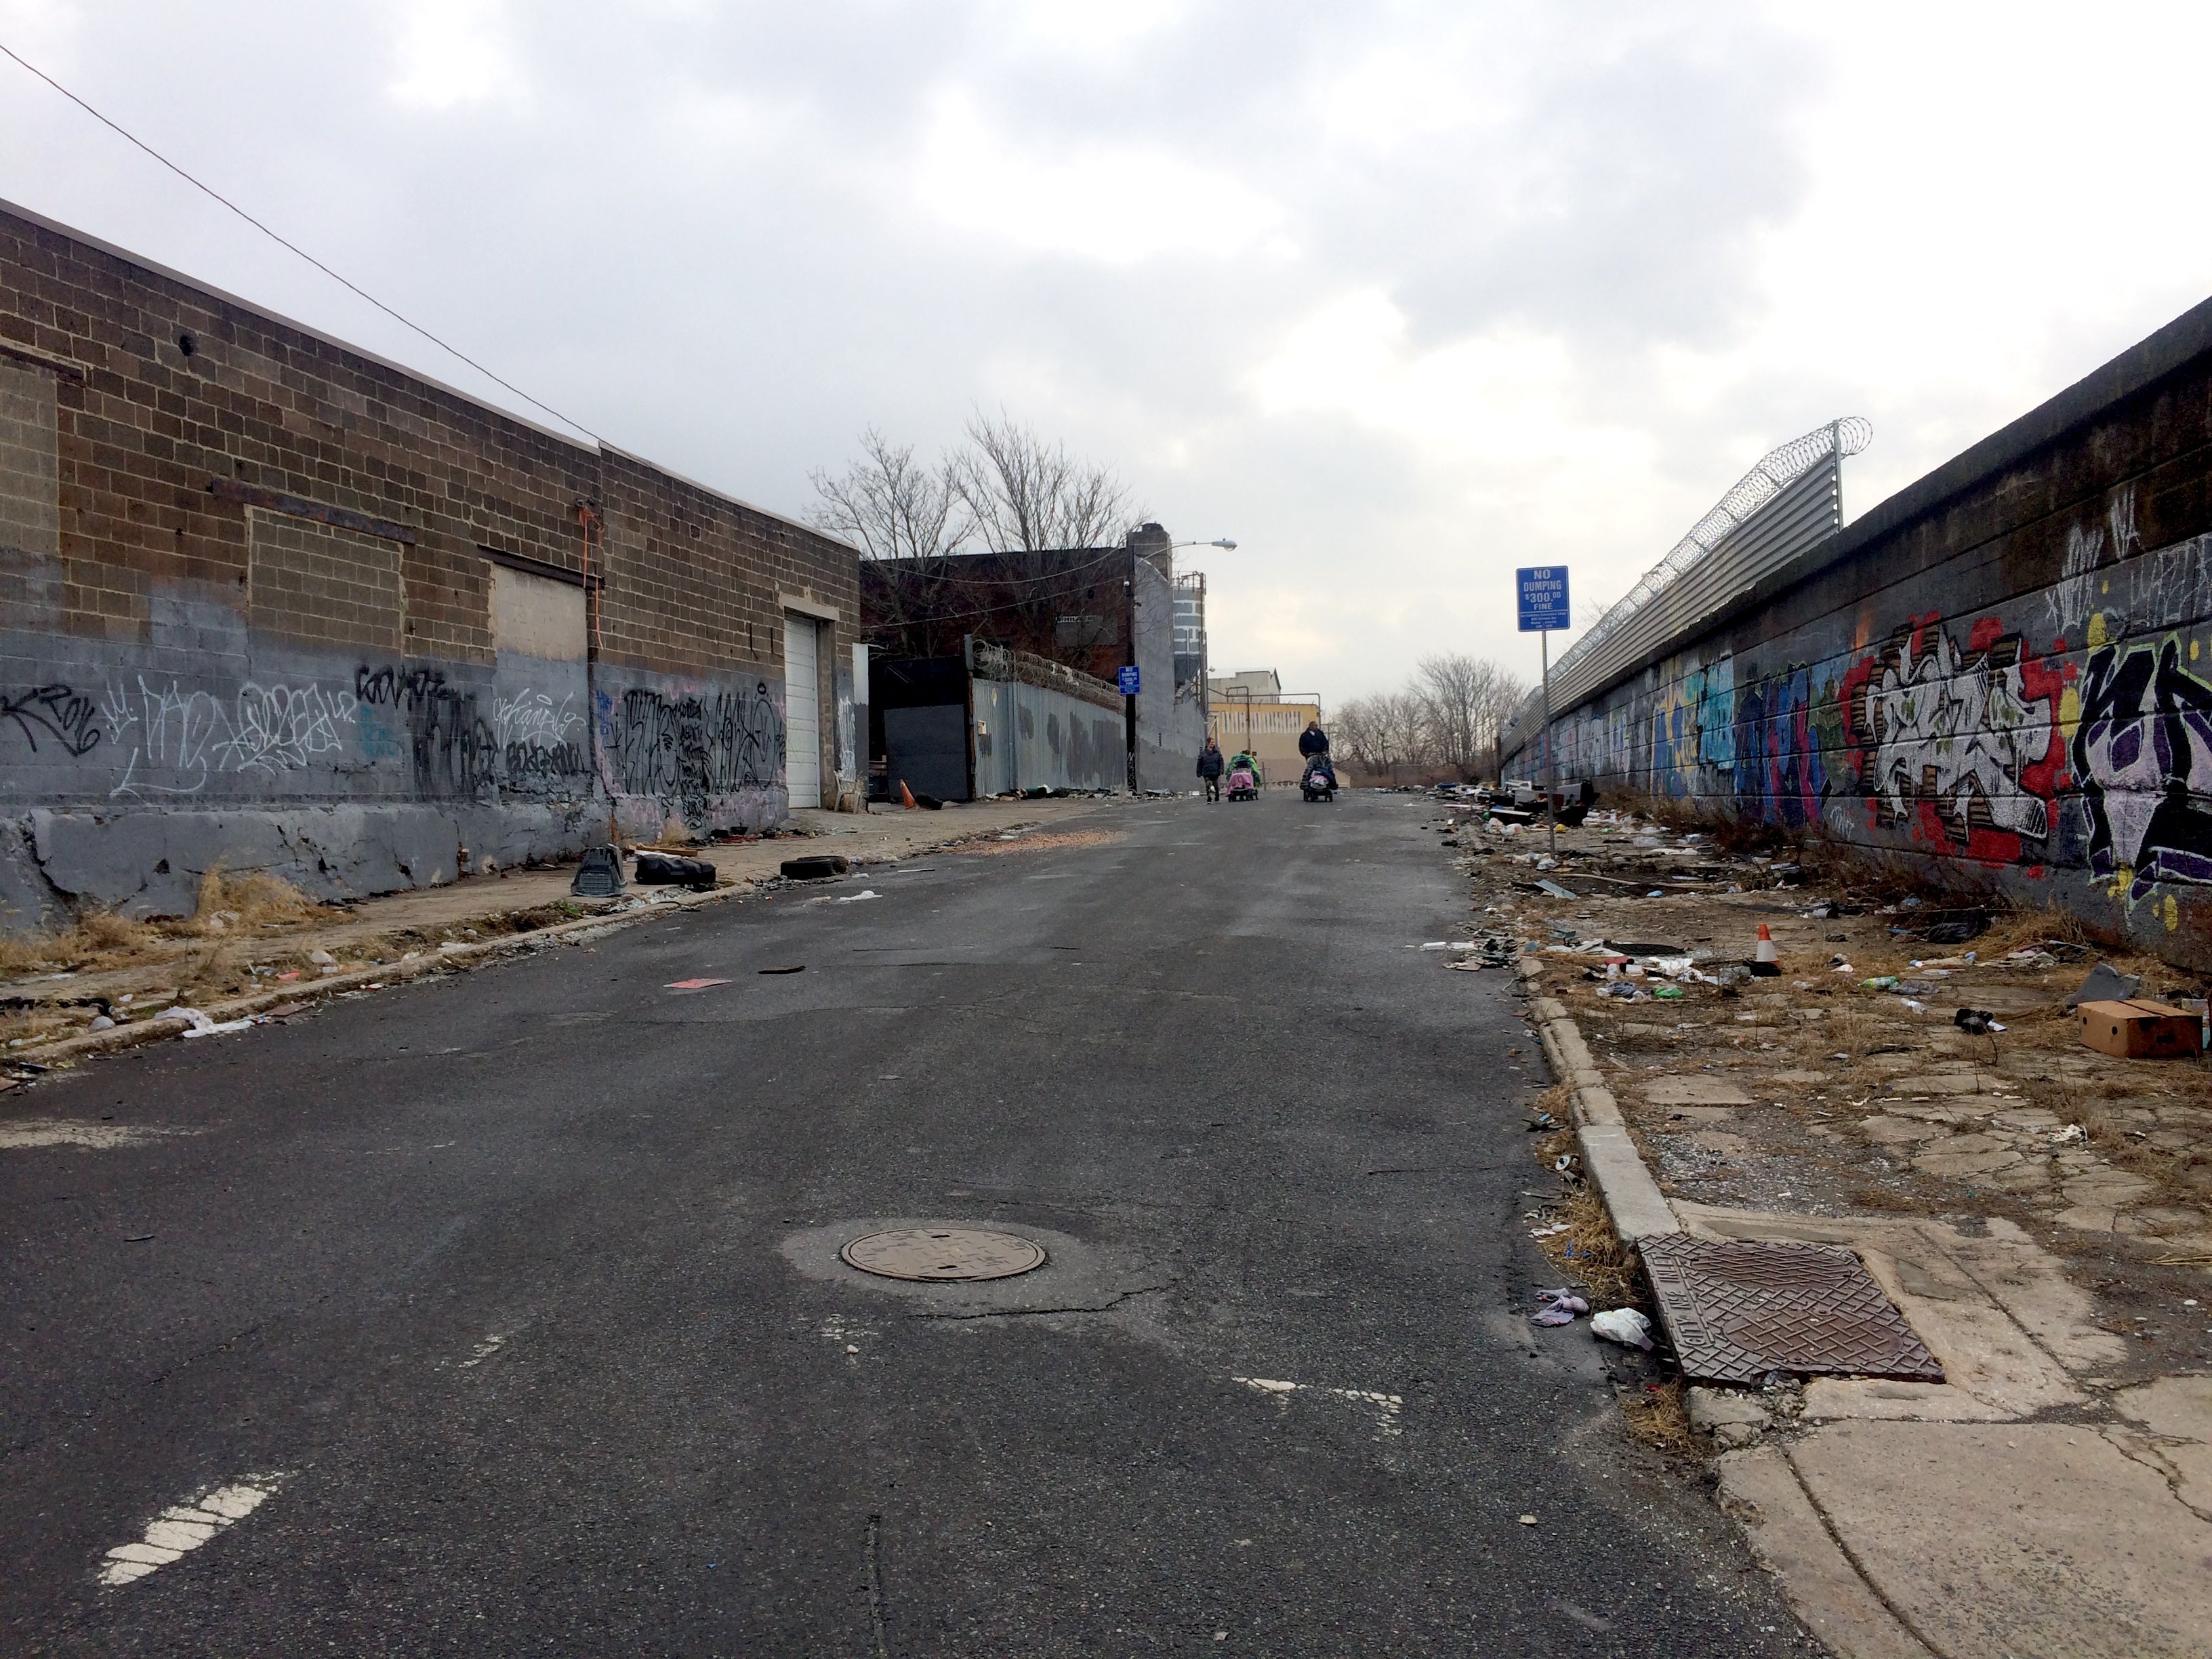 Silver Street outside Philadelphia Scrap Metal | Catalina Jaramillo, January 2016